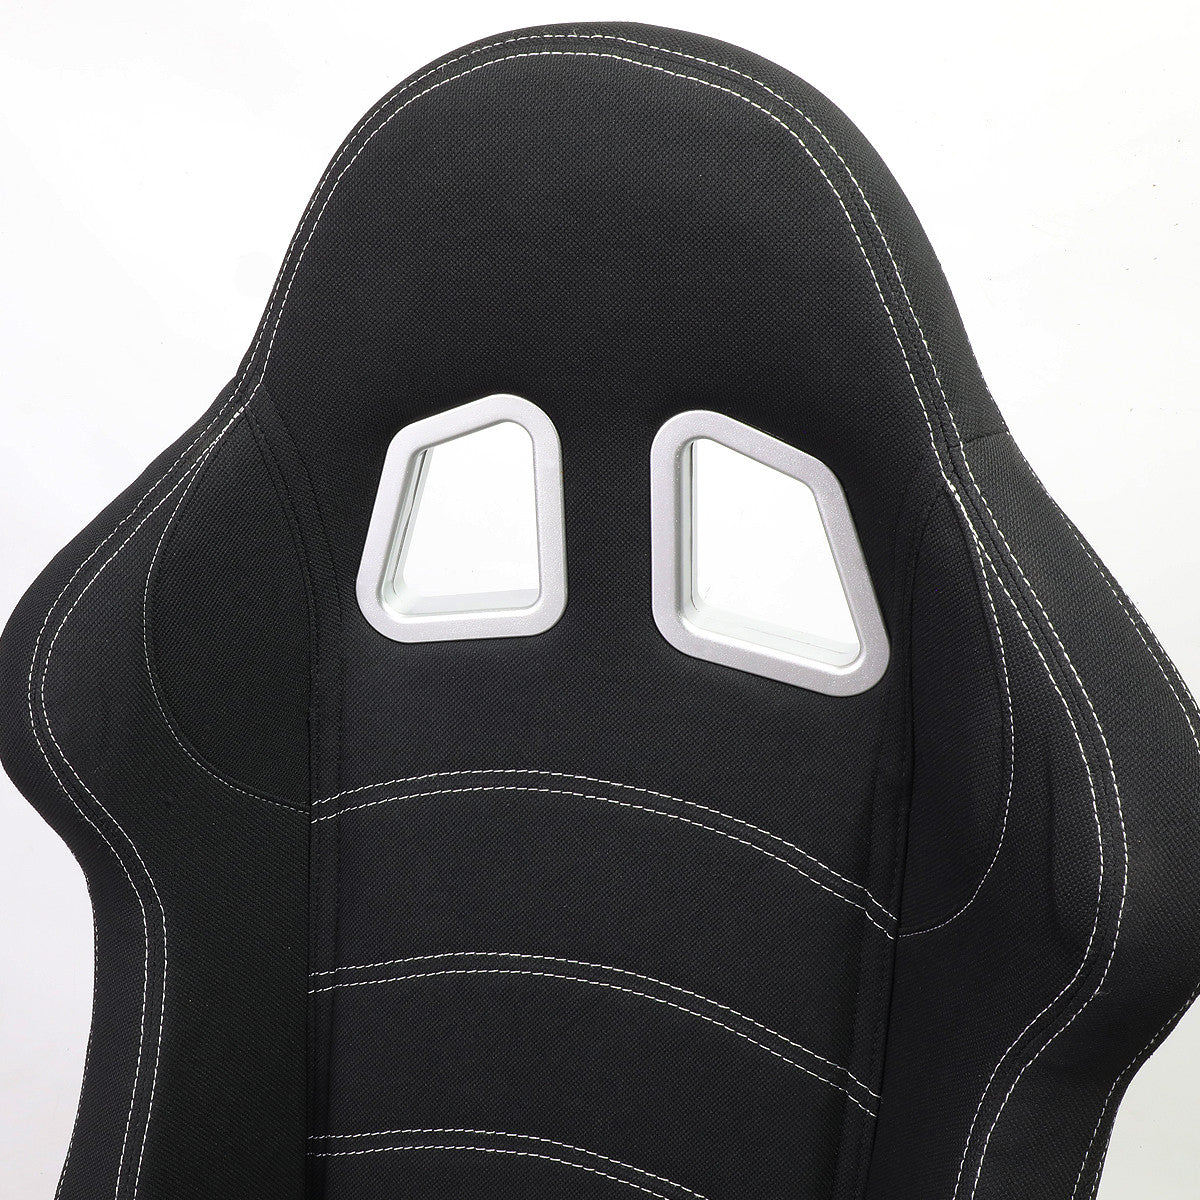 Racing Seats - Reclinable - Woven Fabric - Pair